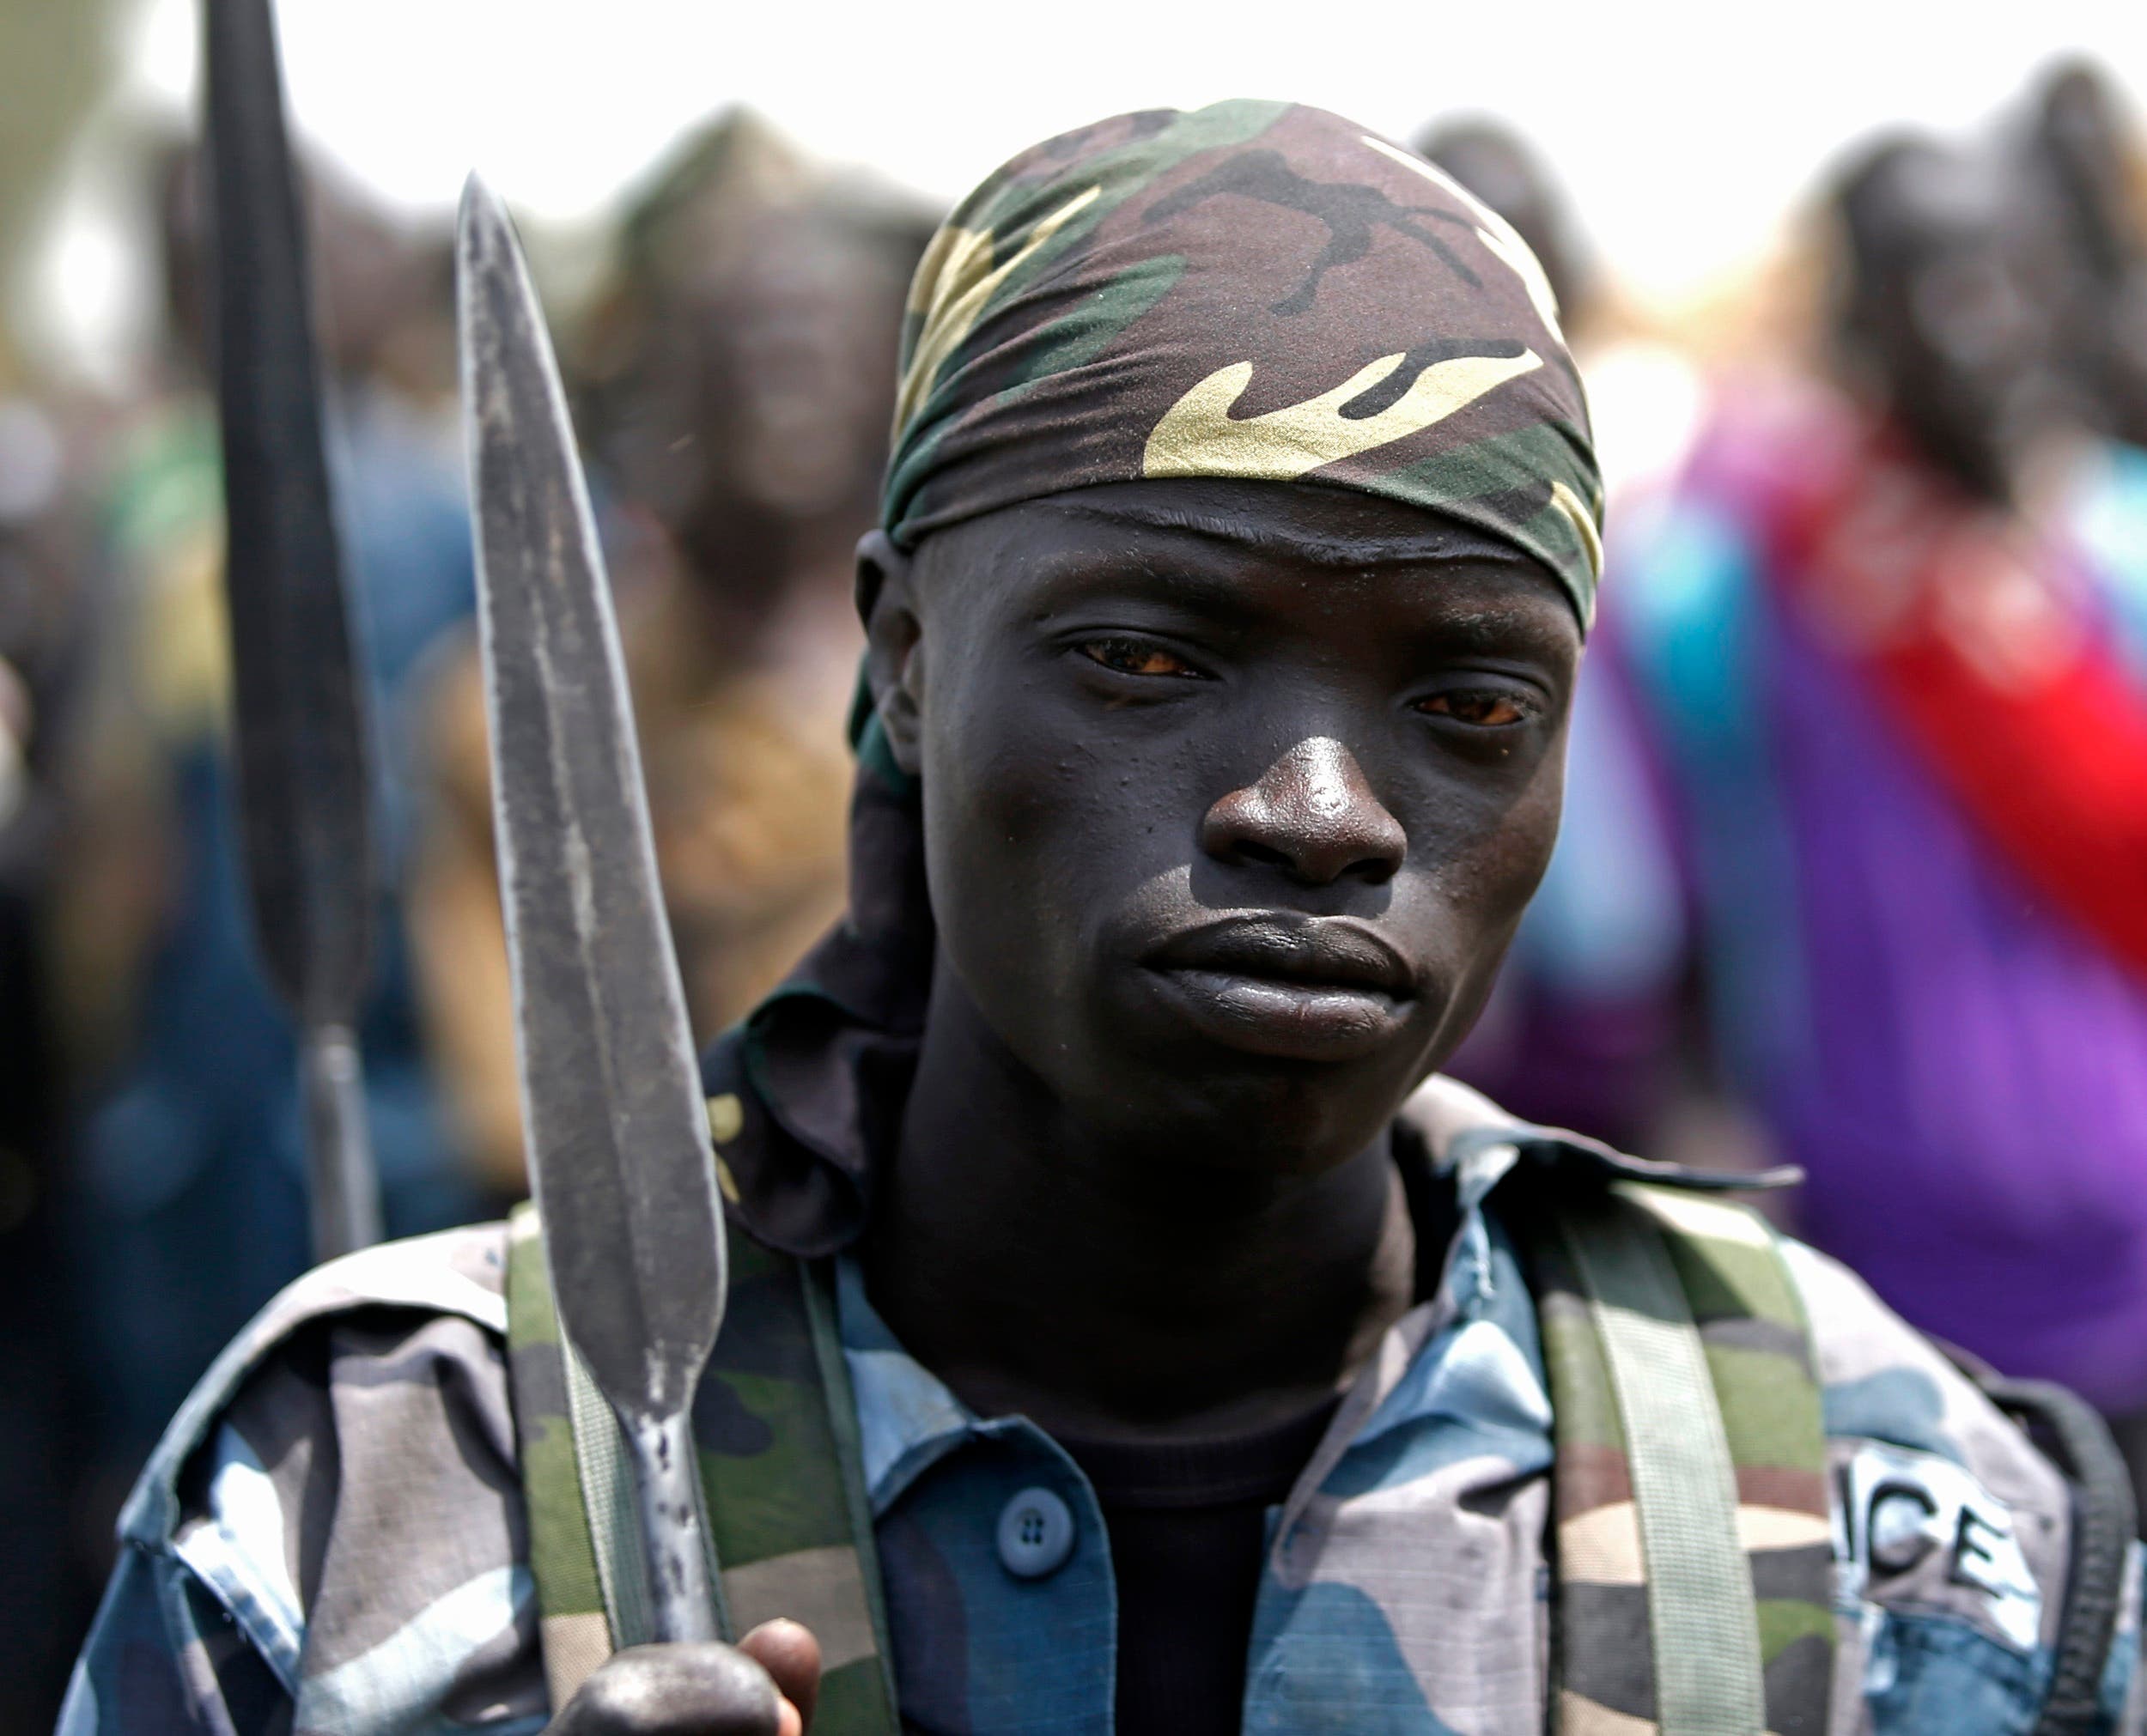 South Sudan rebel fighters